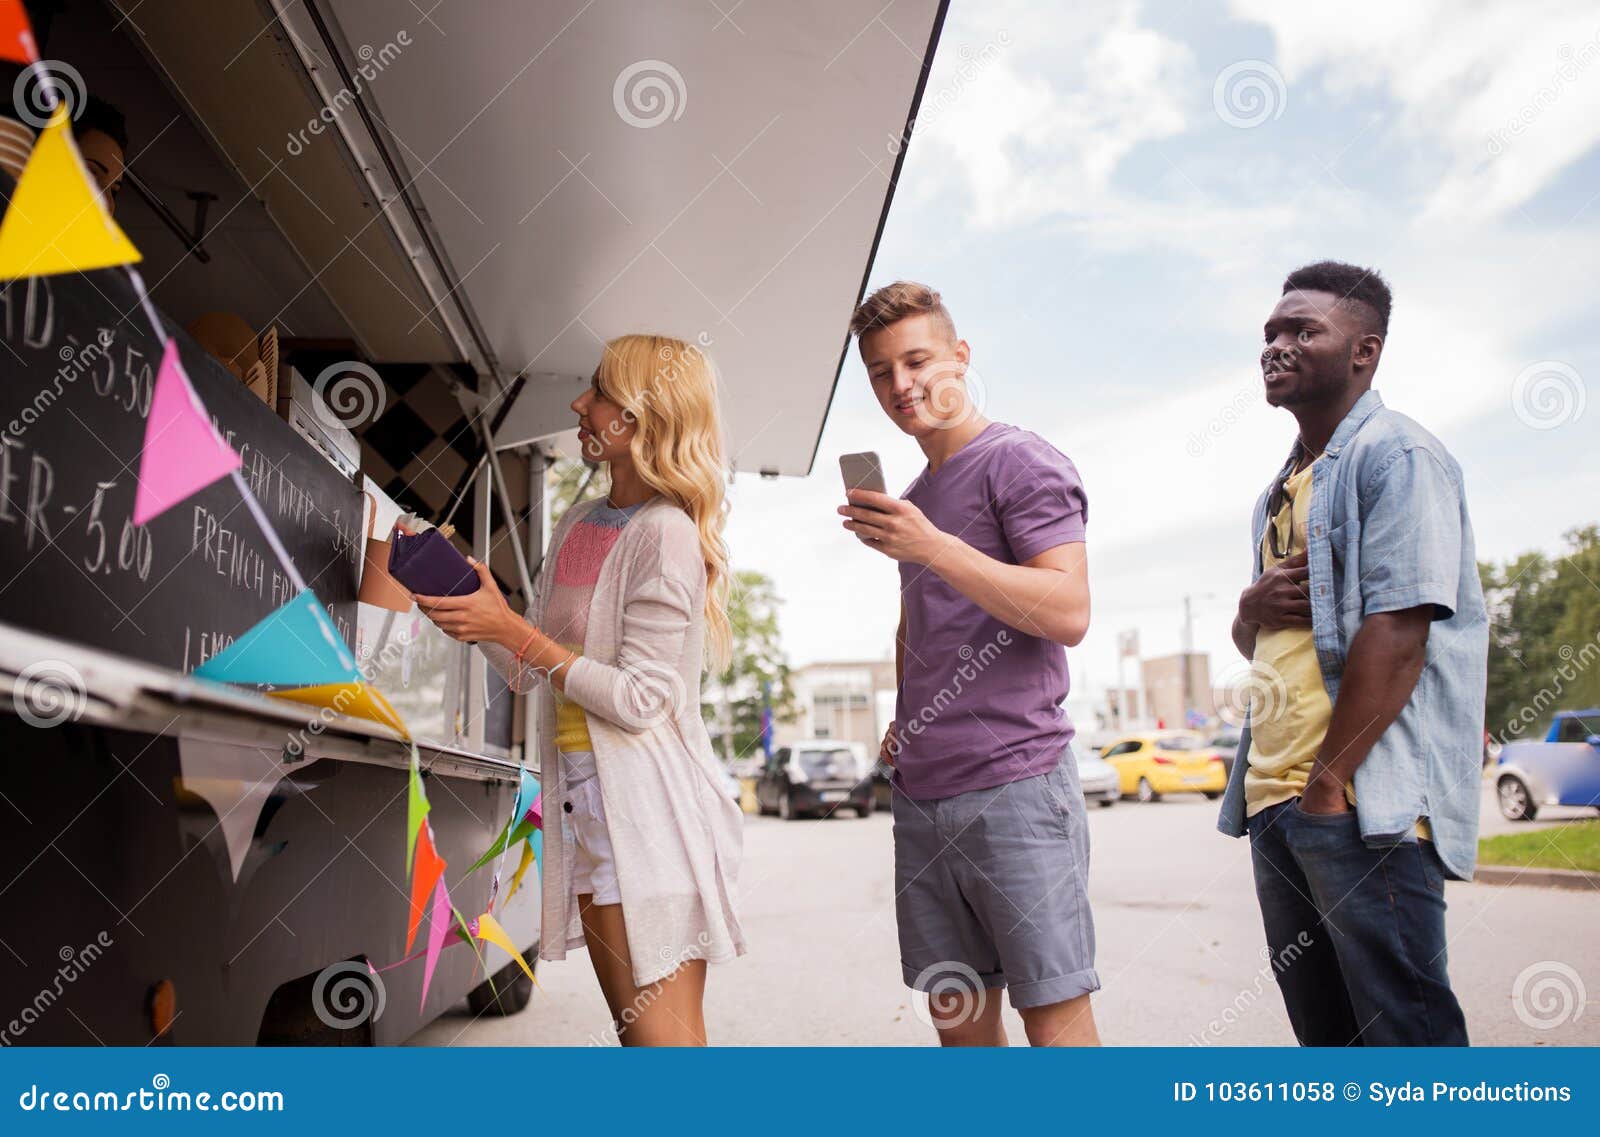 happy customers queue at food truck